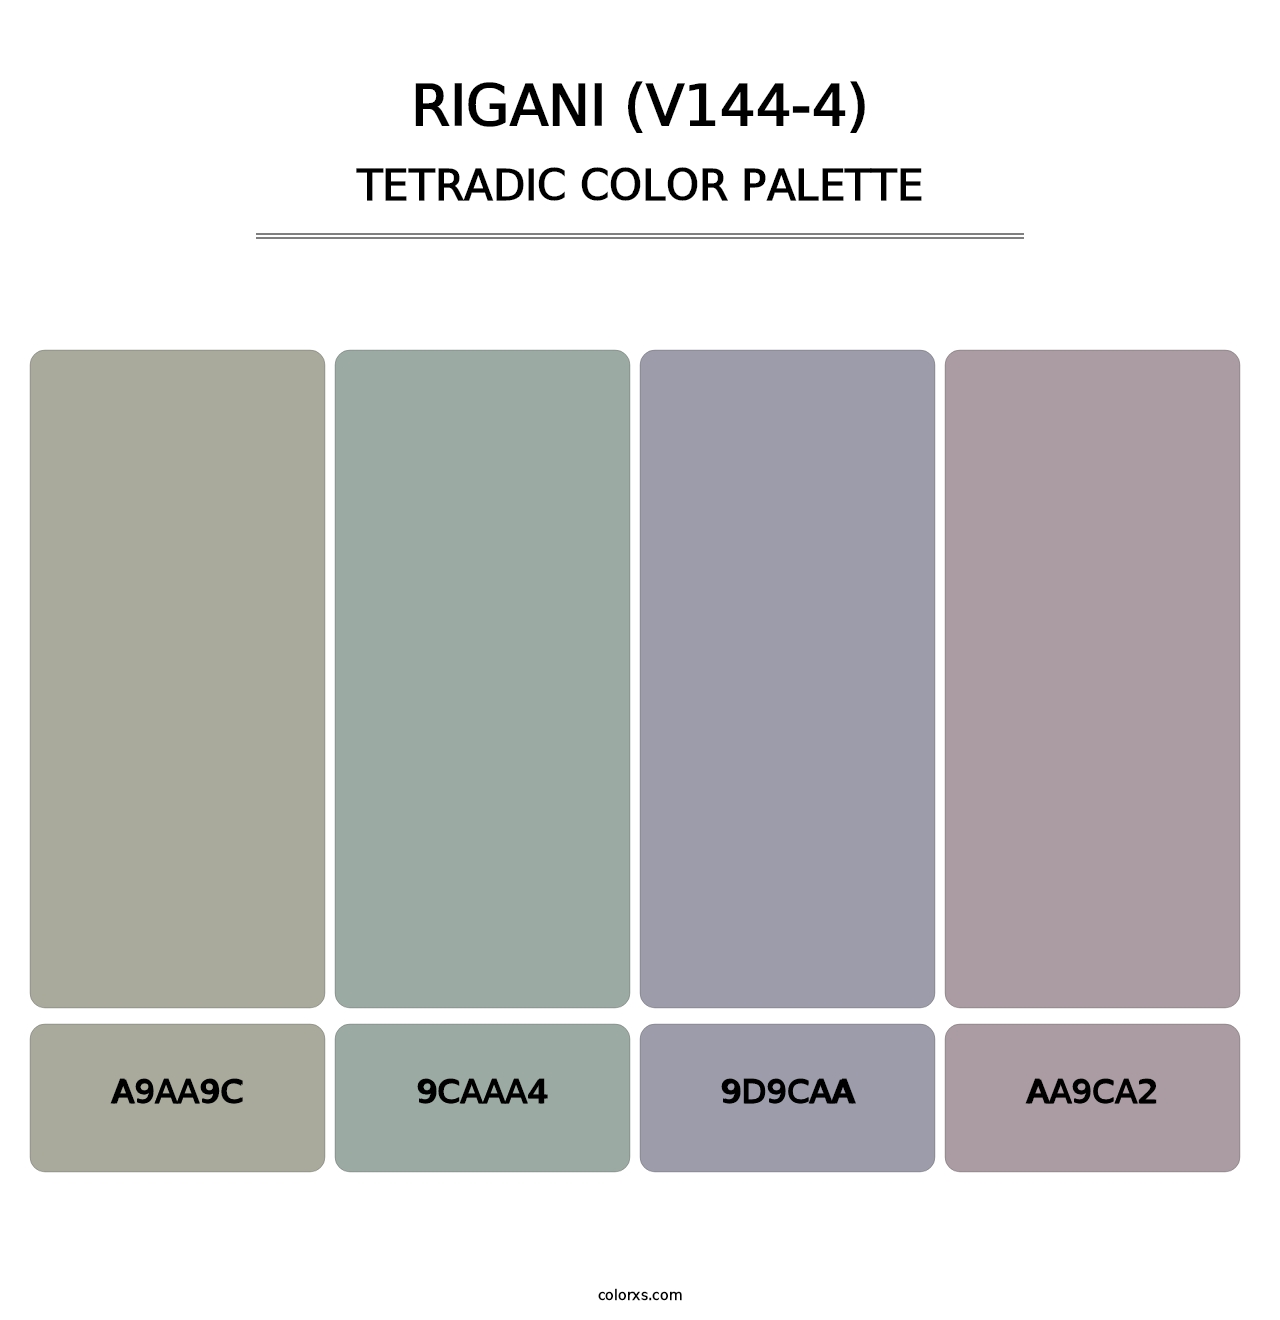 Rigani (V144-4) - Tetradic Color Palette